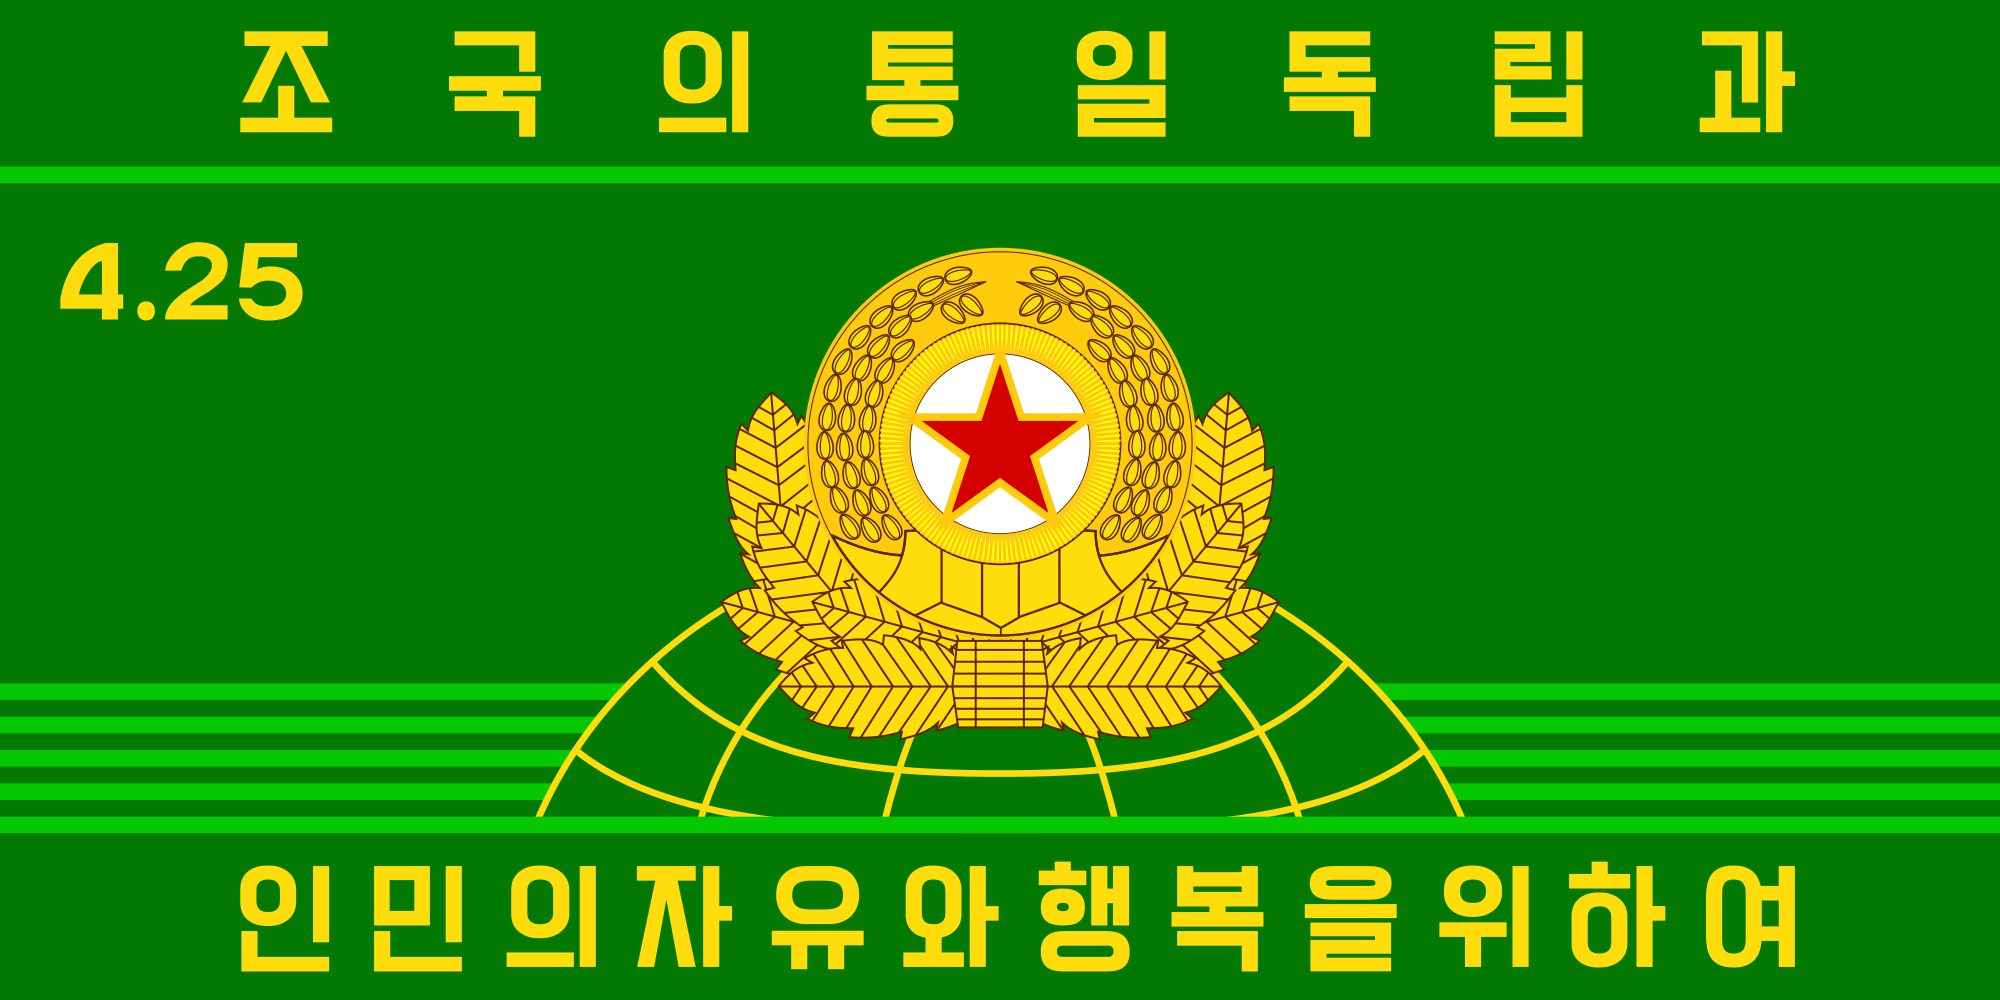 North Korea Flag Military Communism 2000x1000